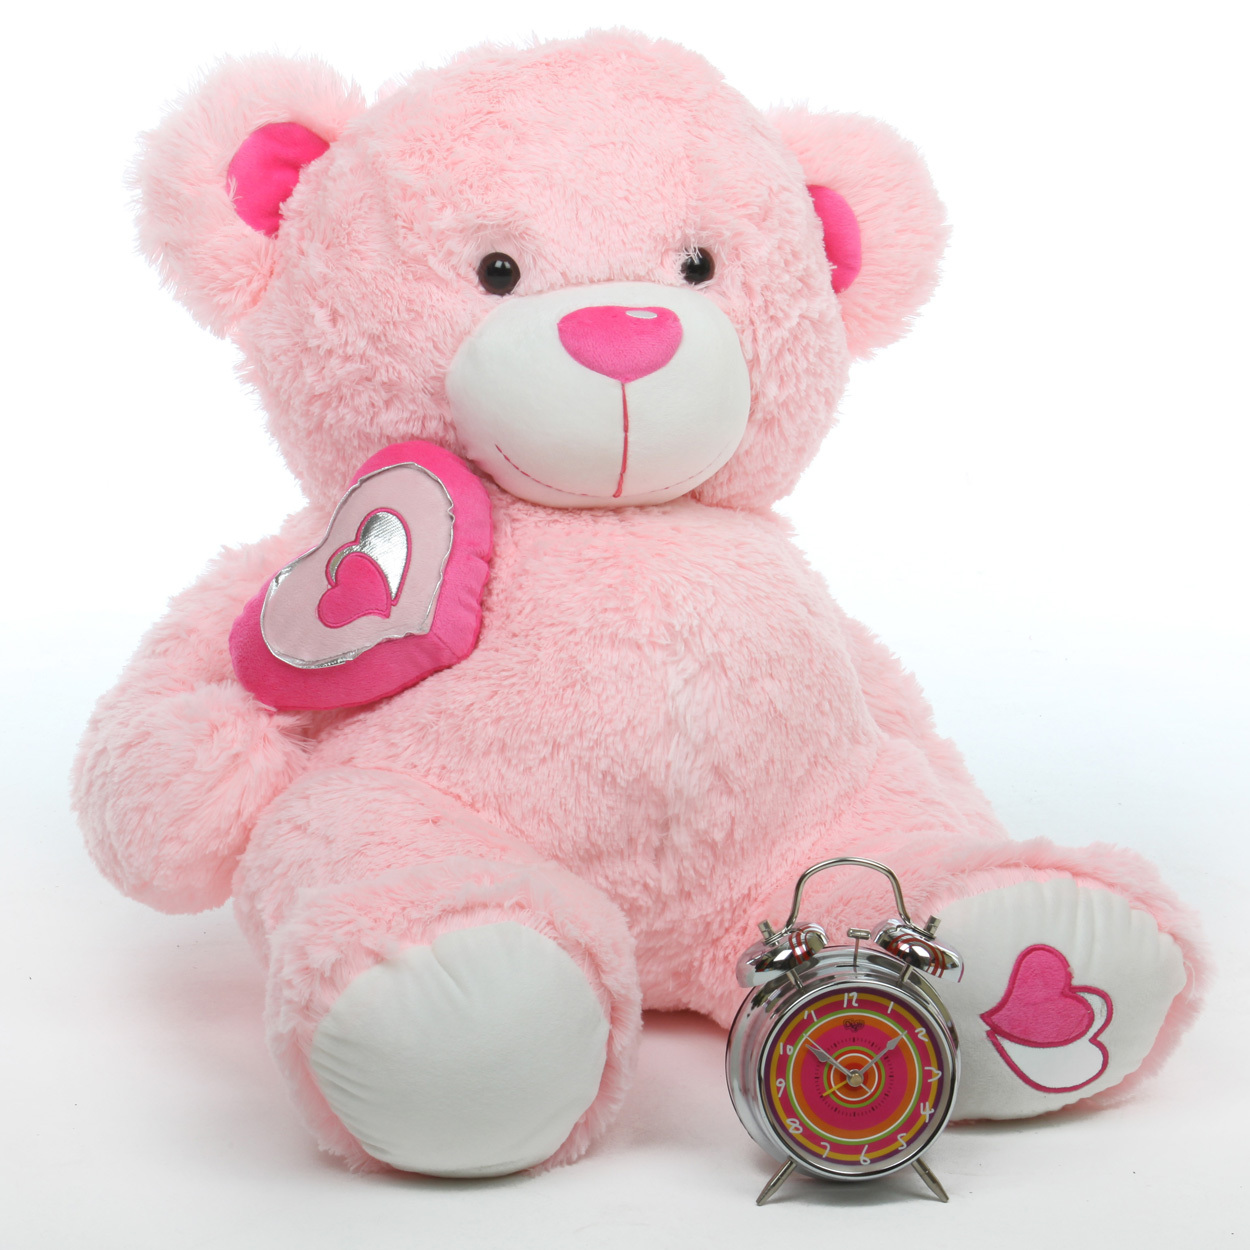 Cutie Pie Big Love Pink Stuffed Teddy Bear Giant